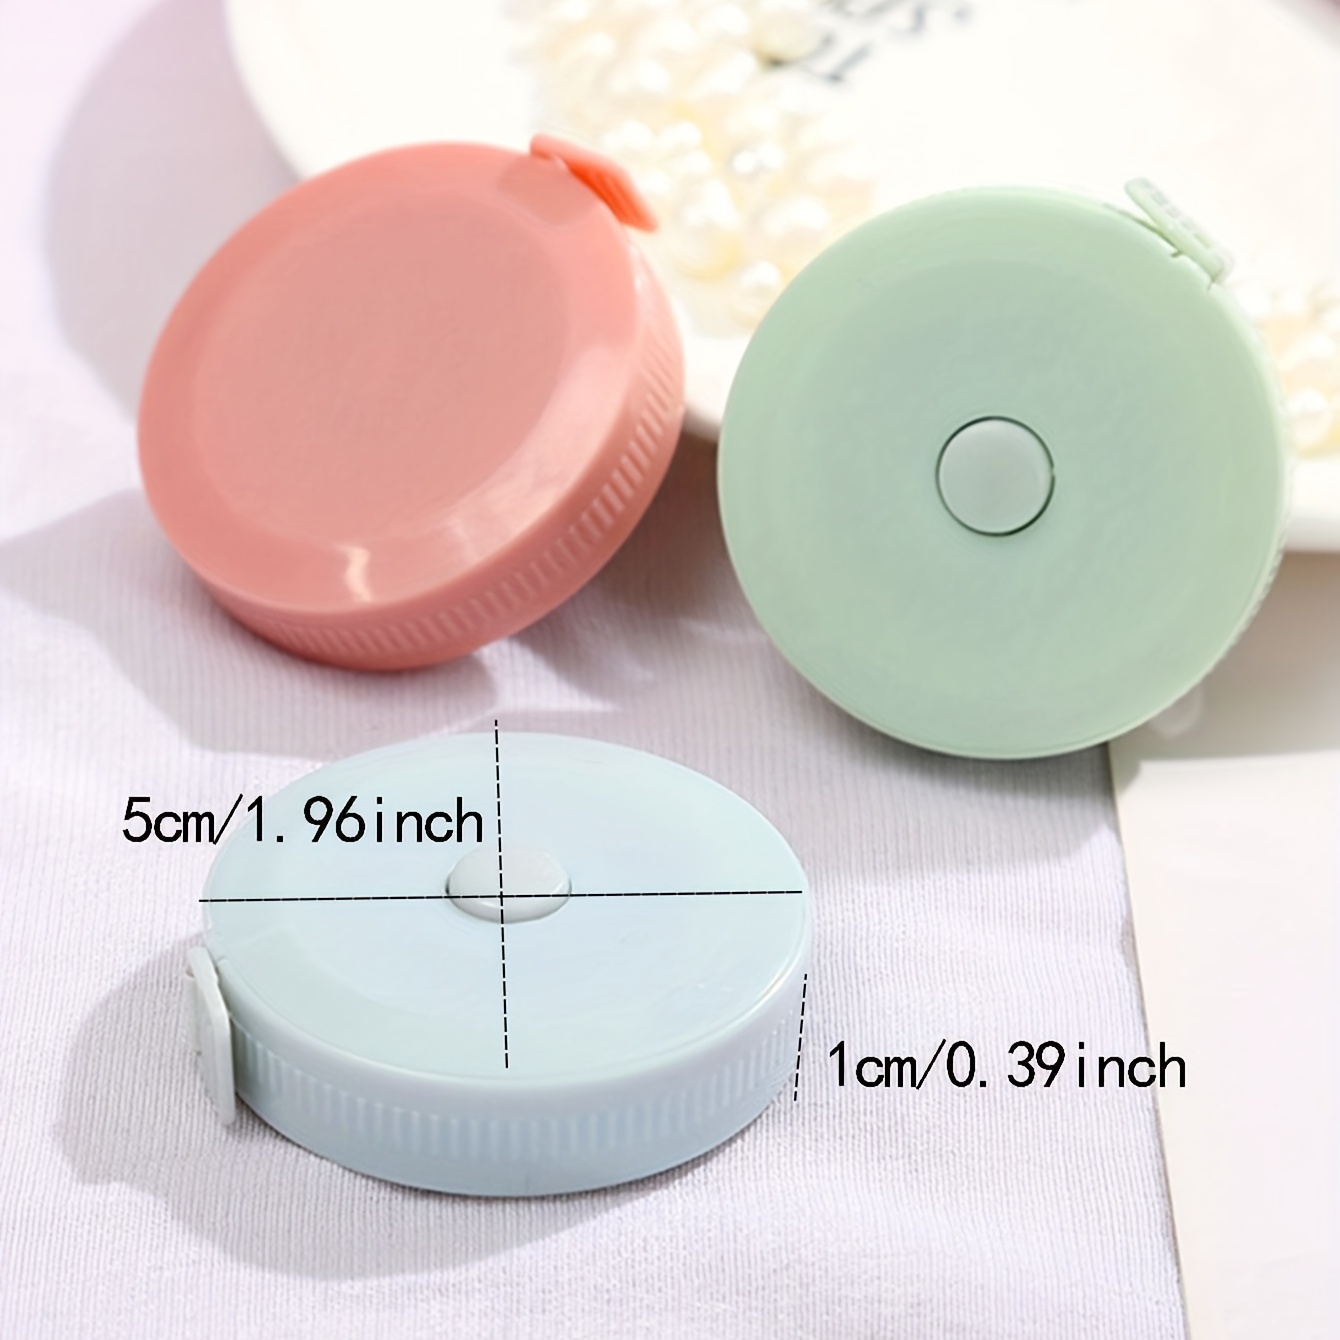 Tianse Soft Round Shape Tape Measure Push Button Measuring - Temu